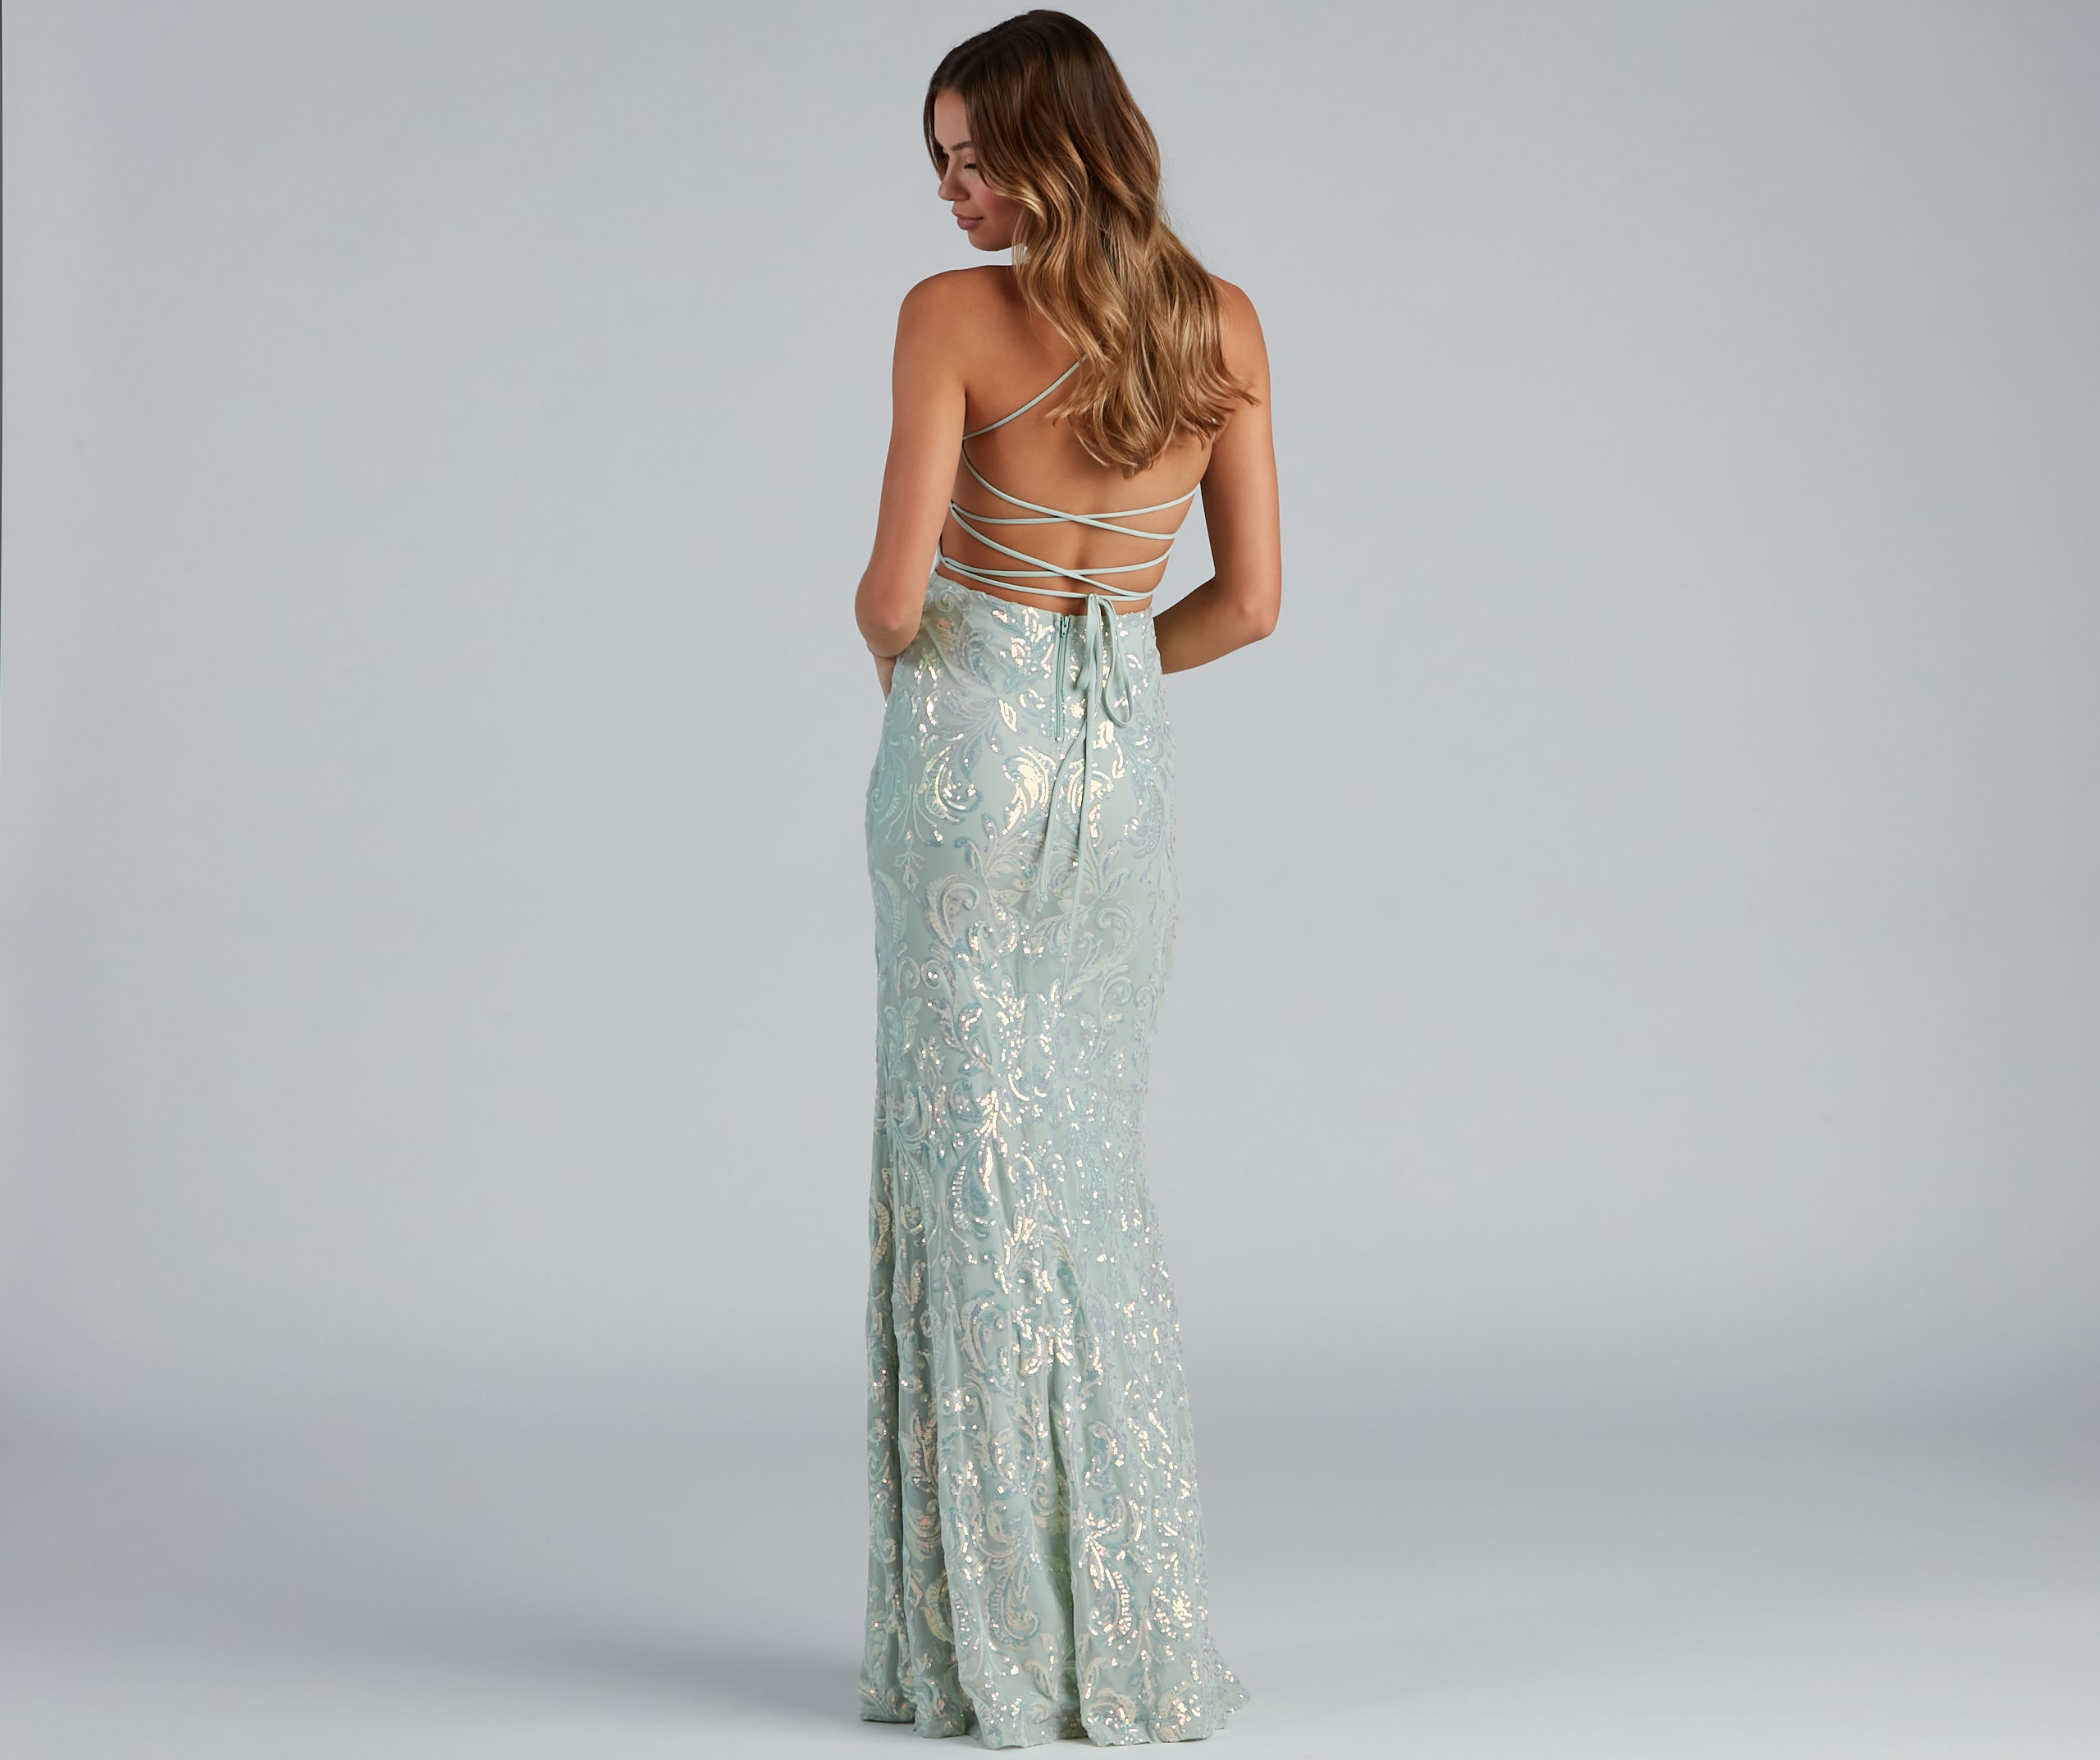 Edlyn Sequin Laceup Mermaid Formal Dress